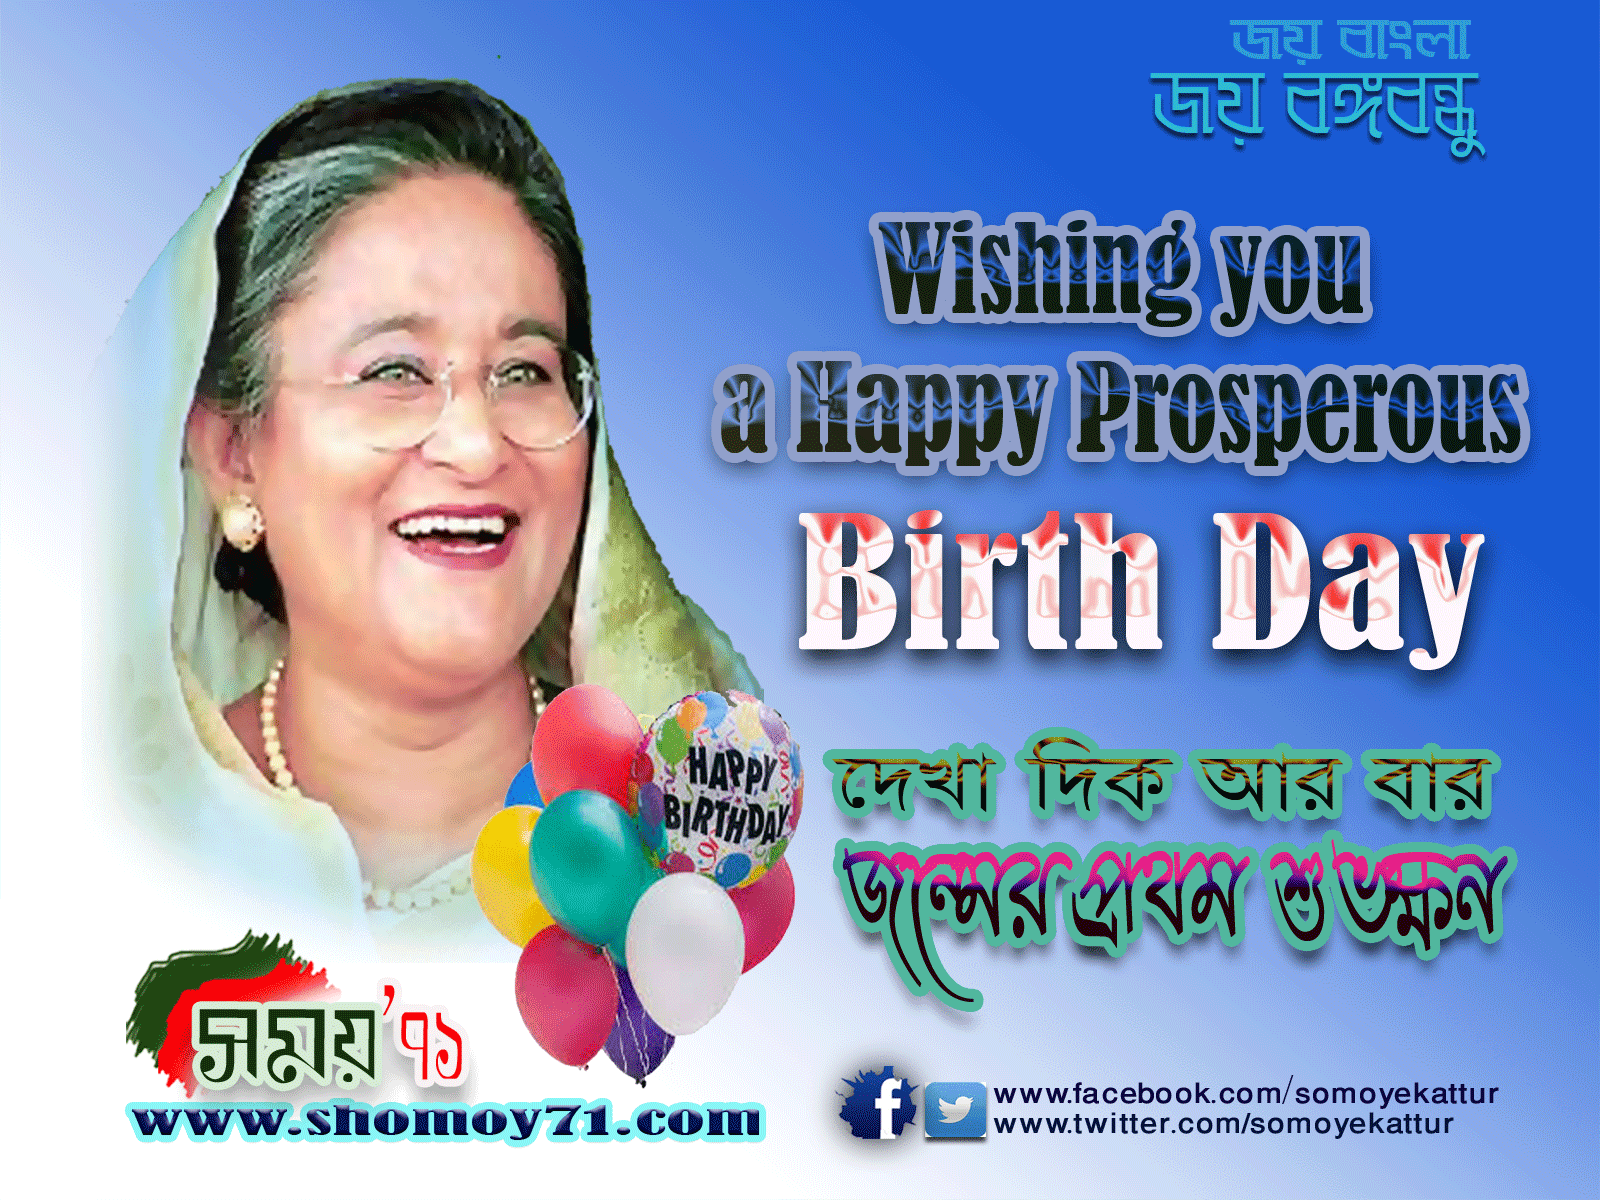 Happy Birth Day to Sheikh Hasina